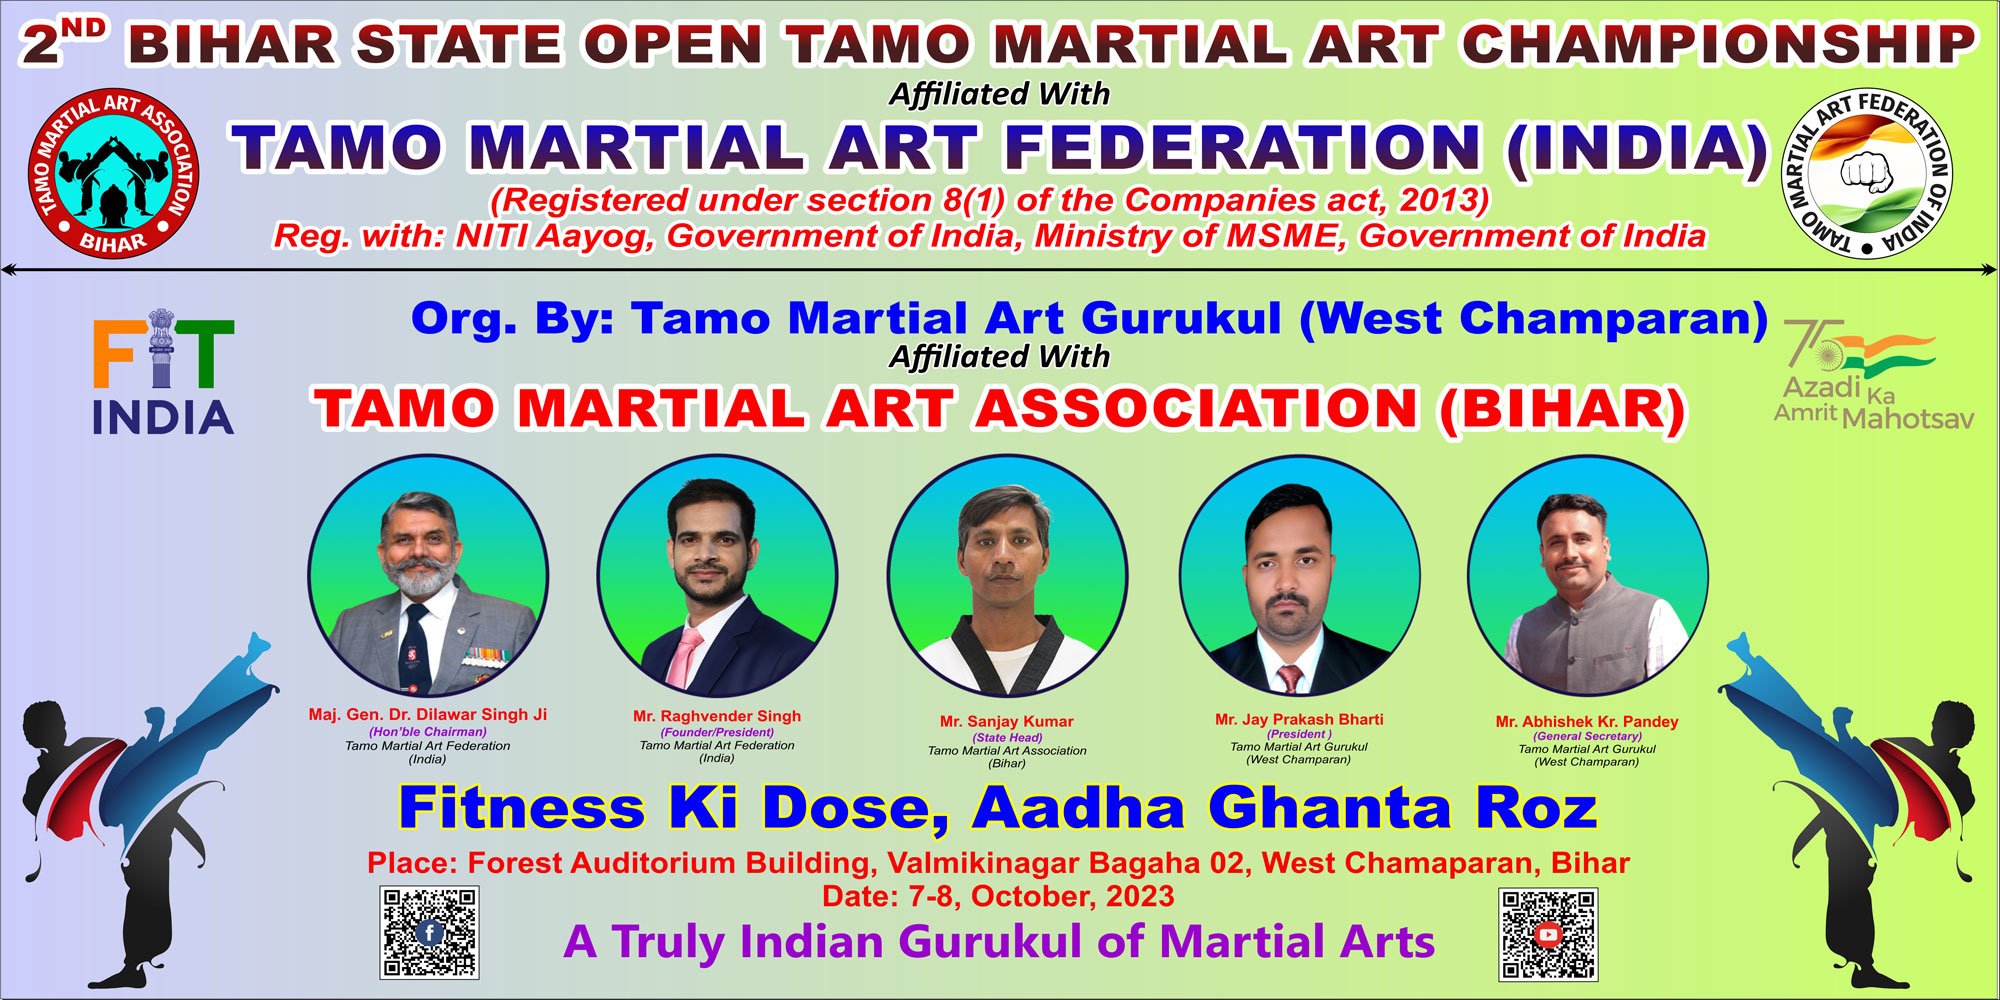 Image of 2nd Bihar State Tamo Martial Art Championship 2023